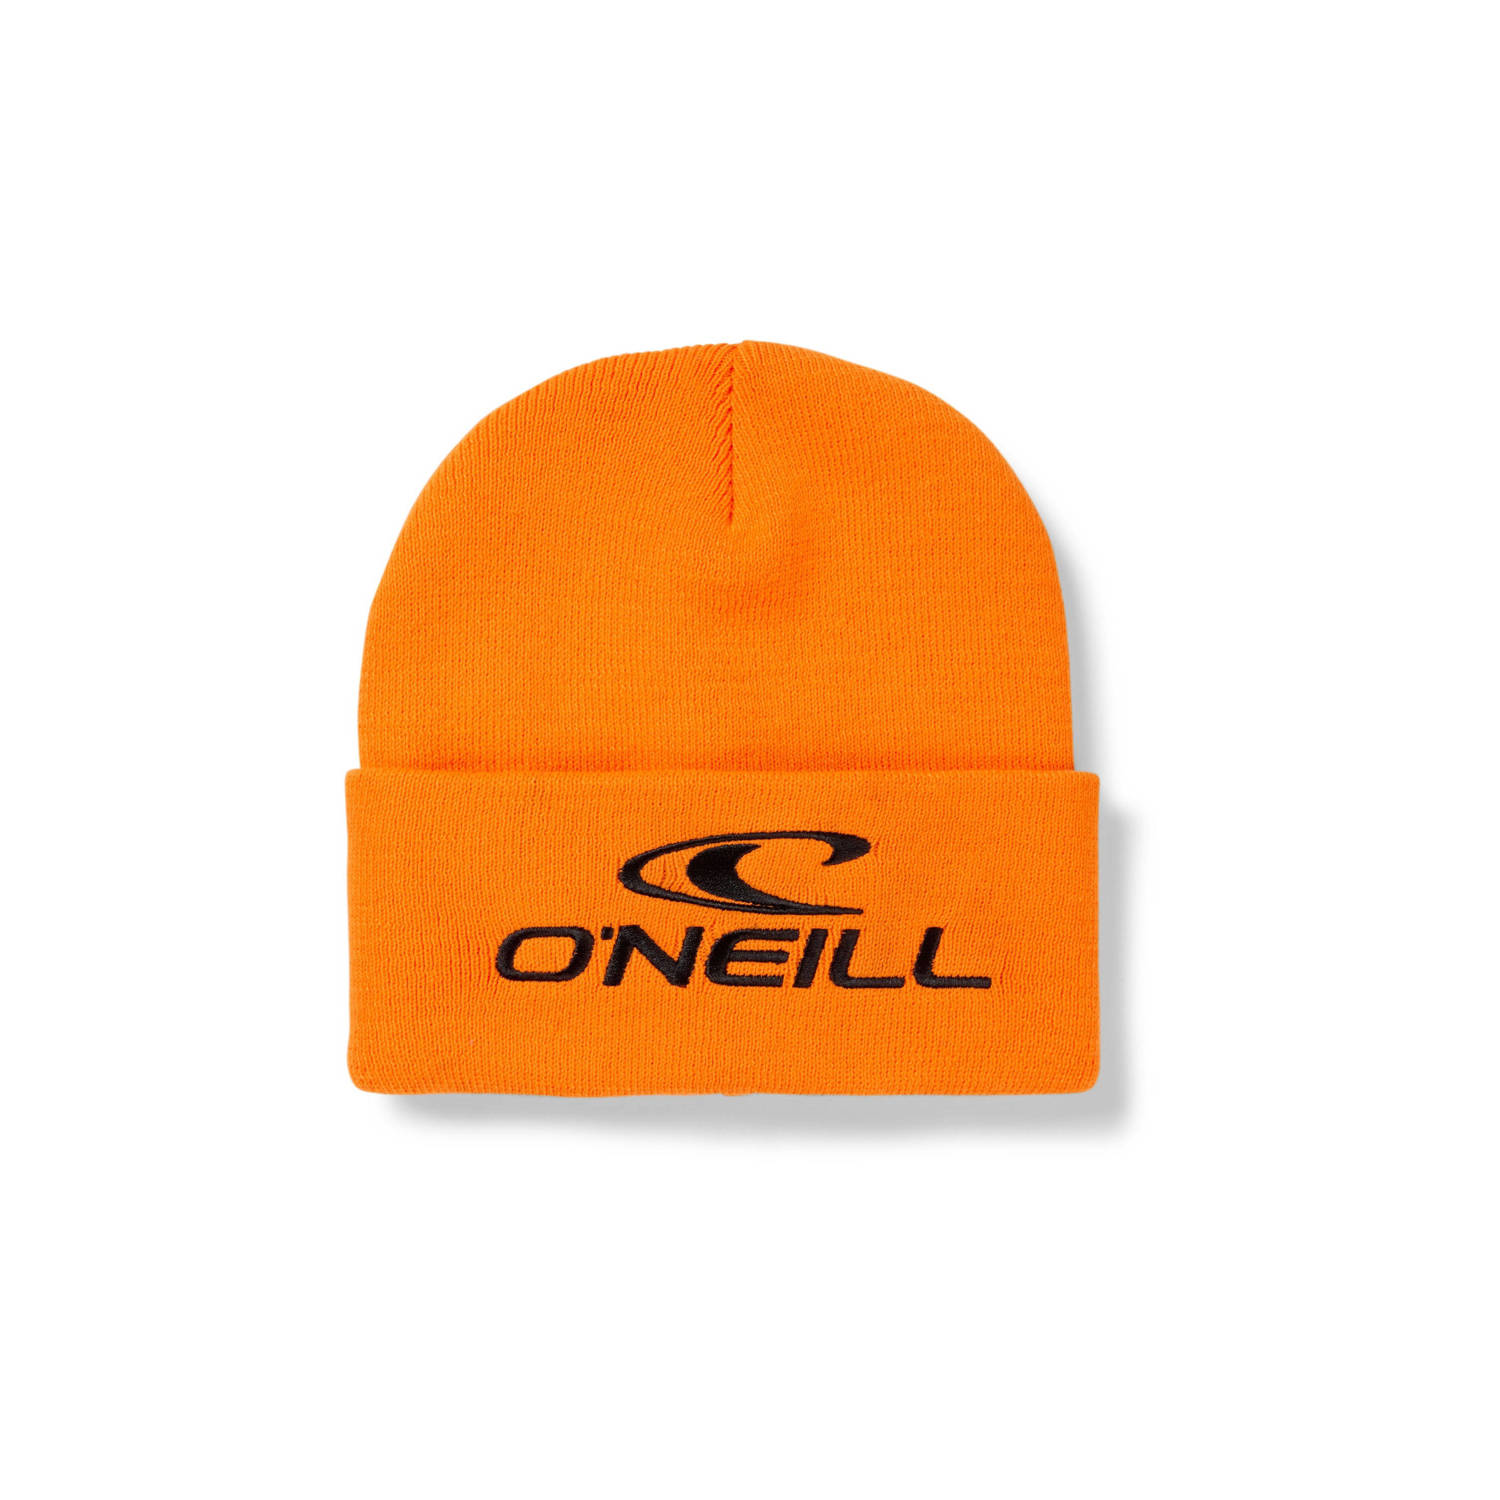 O'Neill muts oranje